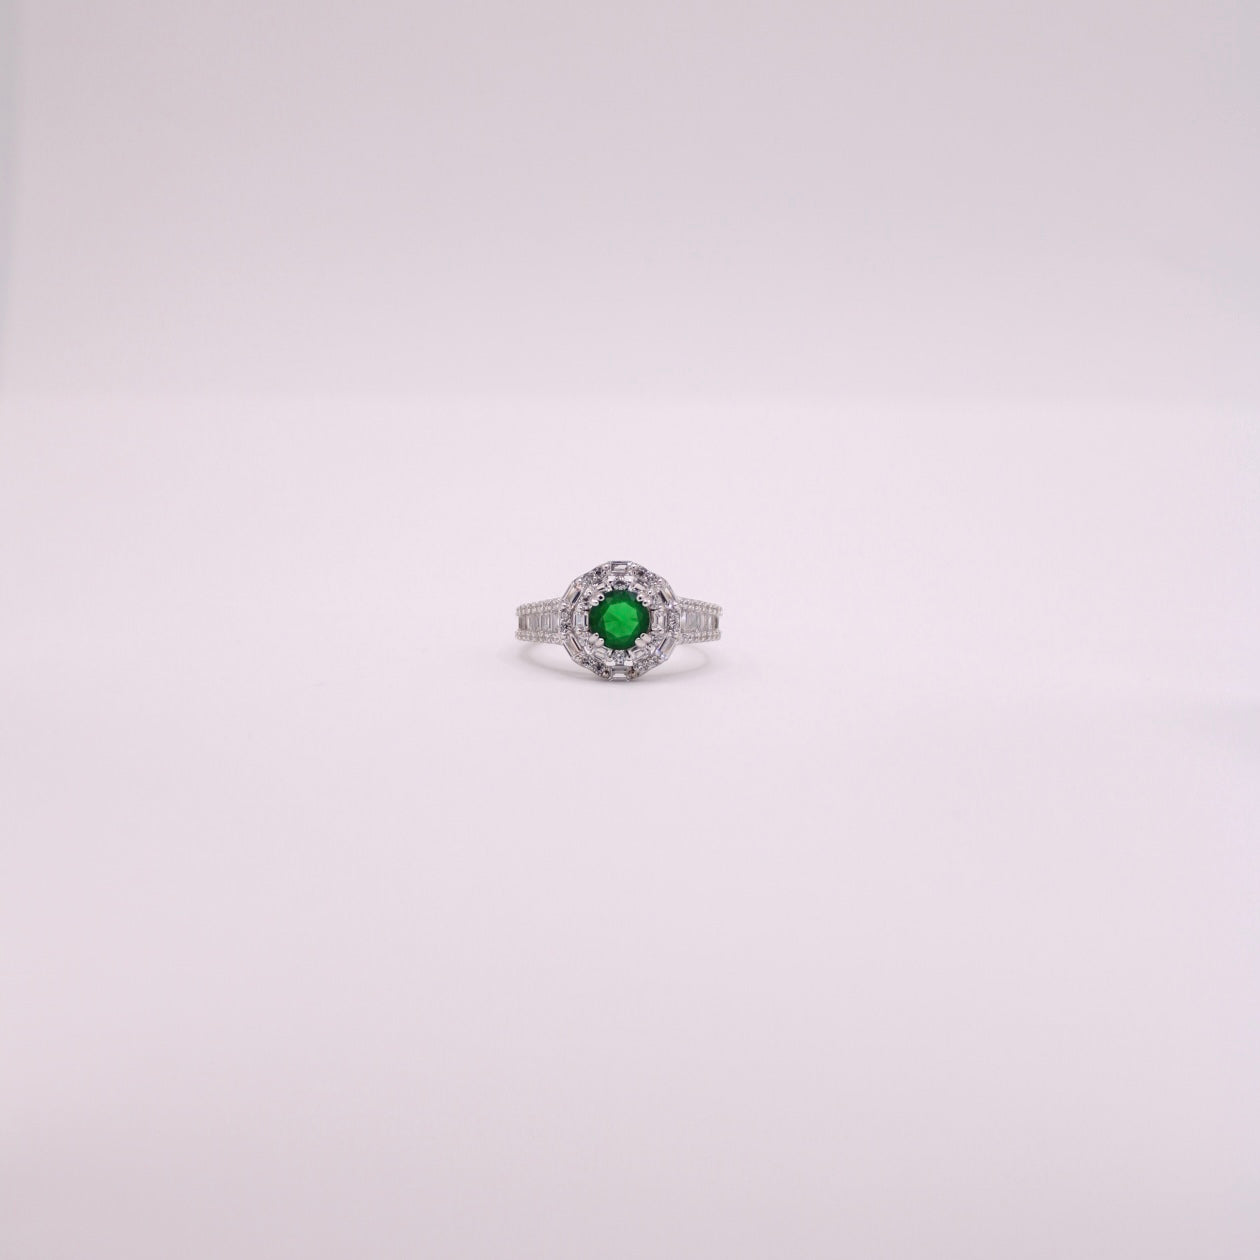 925 Emerald Green Ring